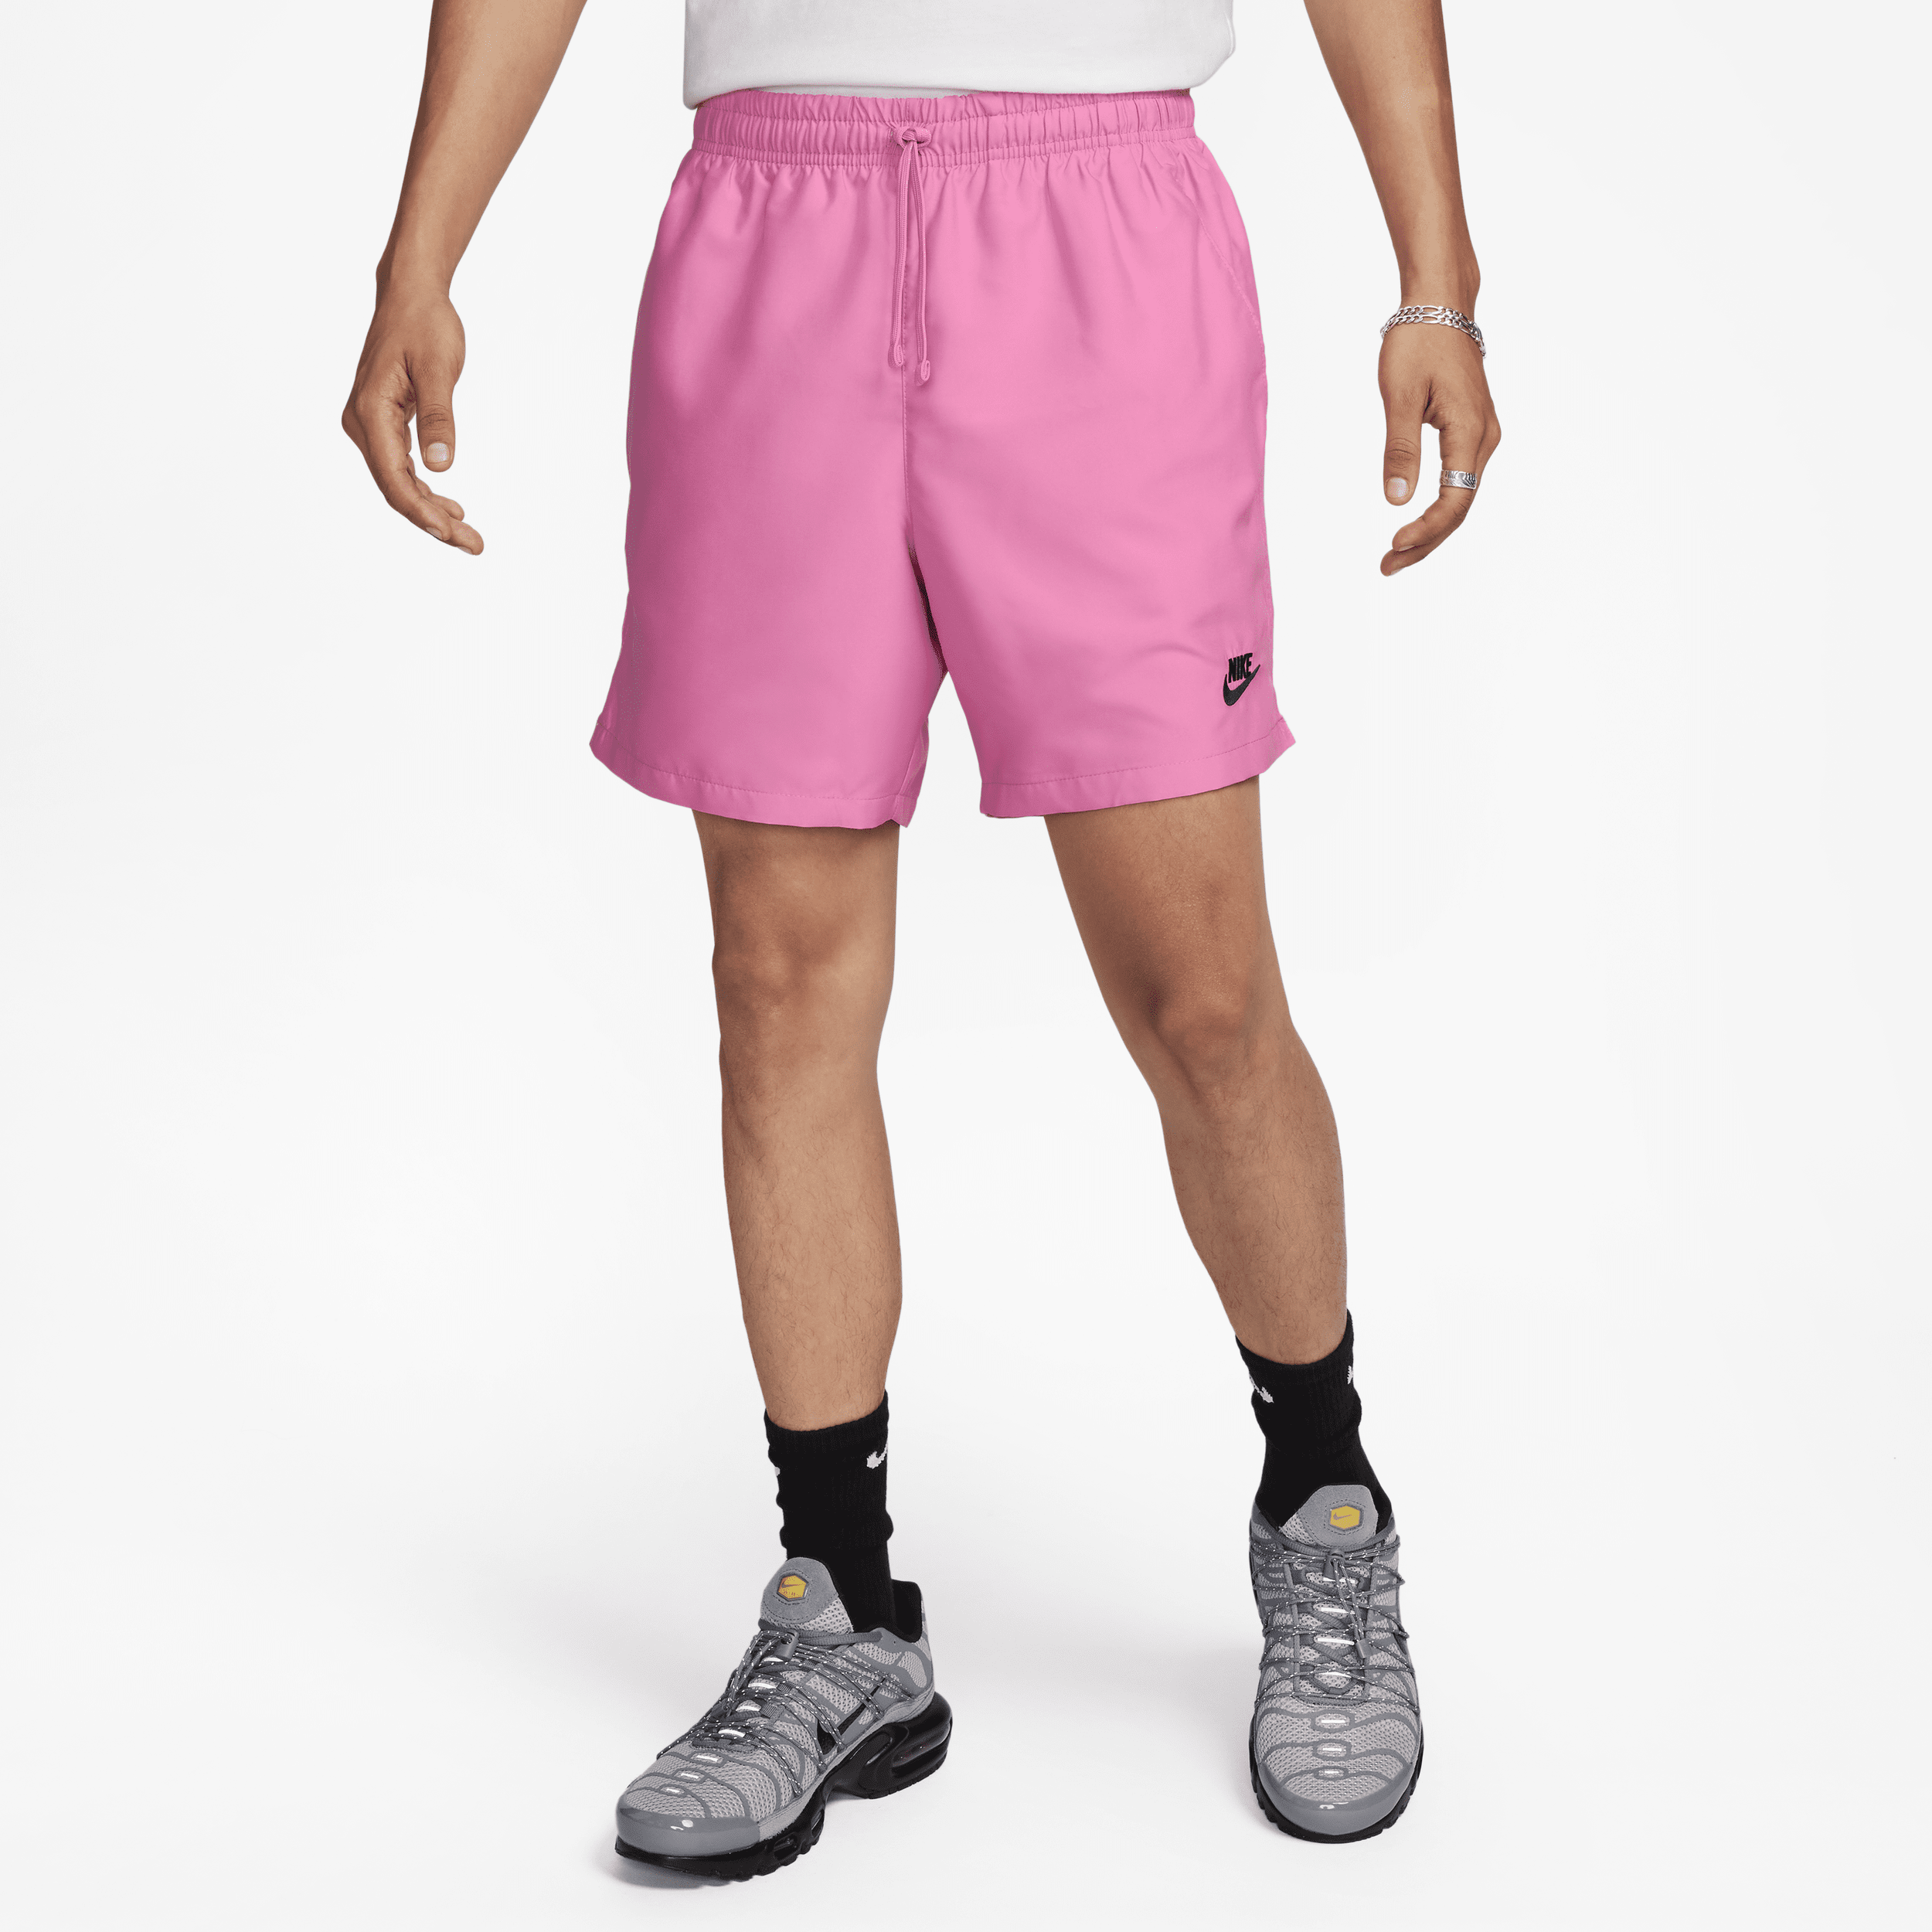 Nike Sportswear Geweven flowshorts voor heren - Rood